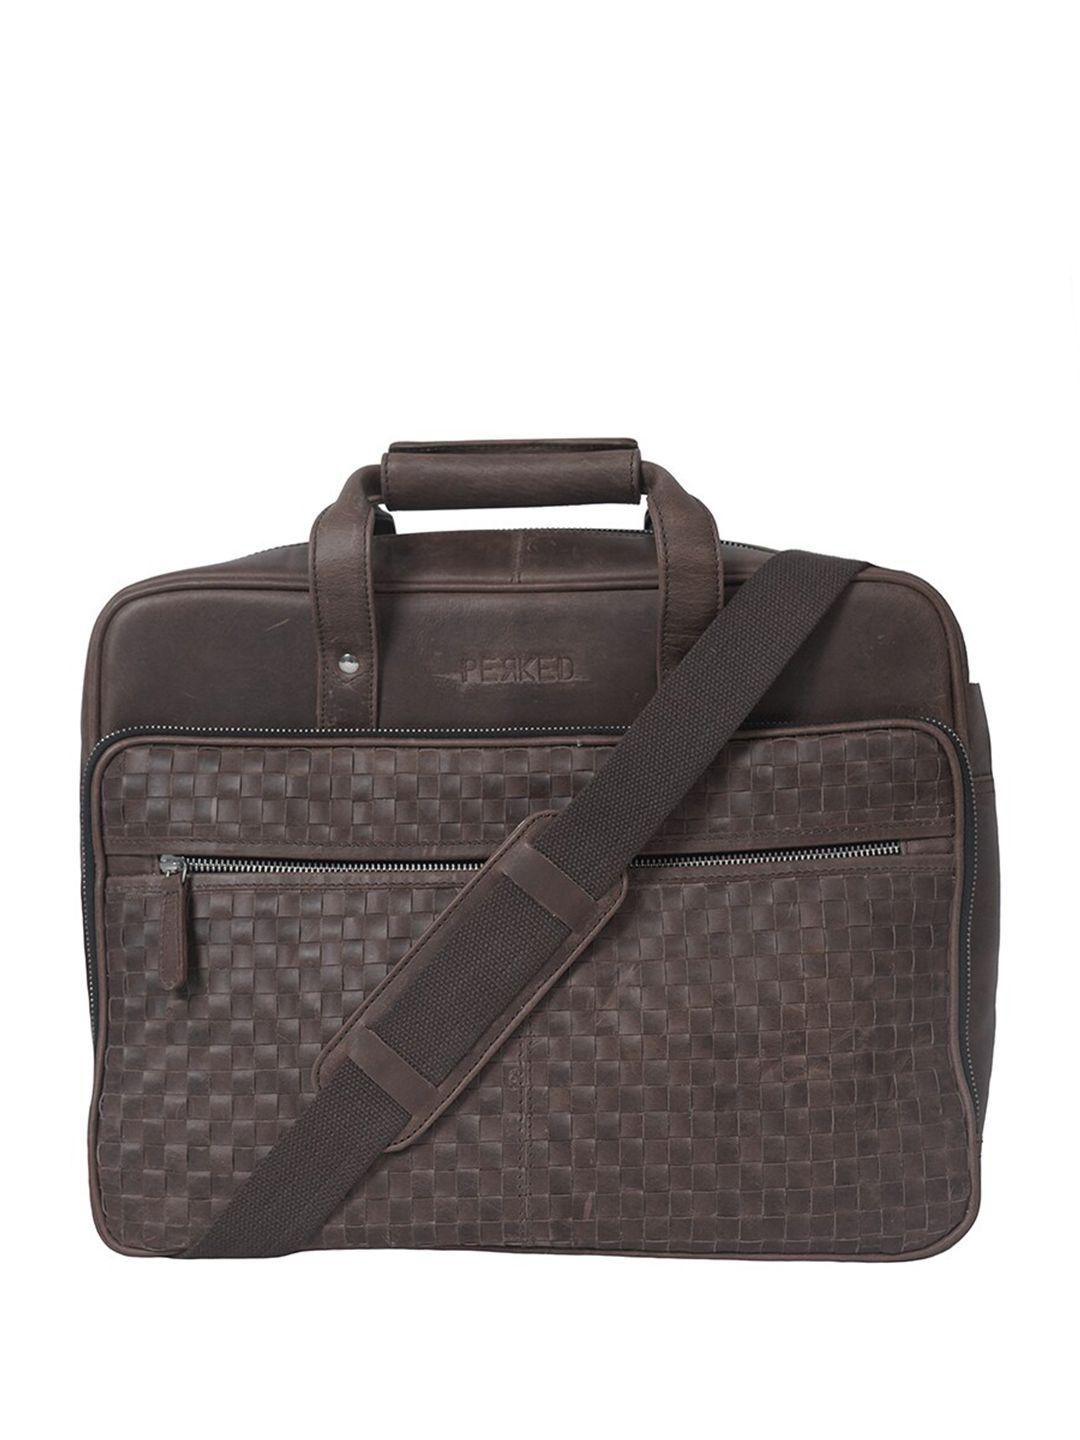 perked unisex textured leather laptop bag